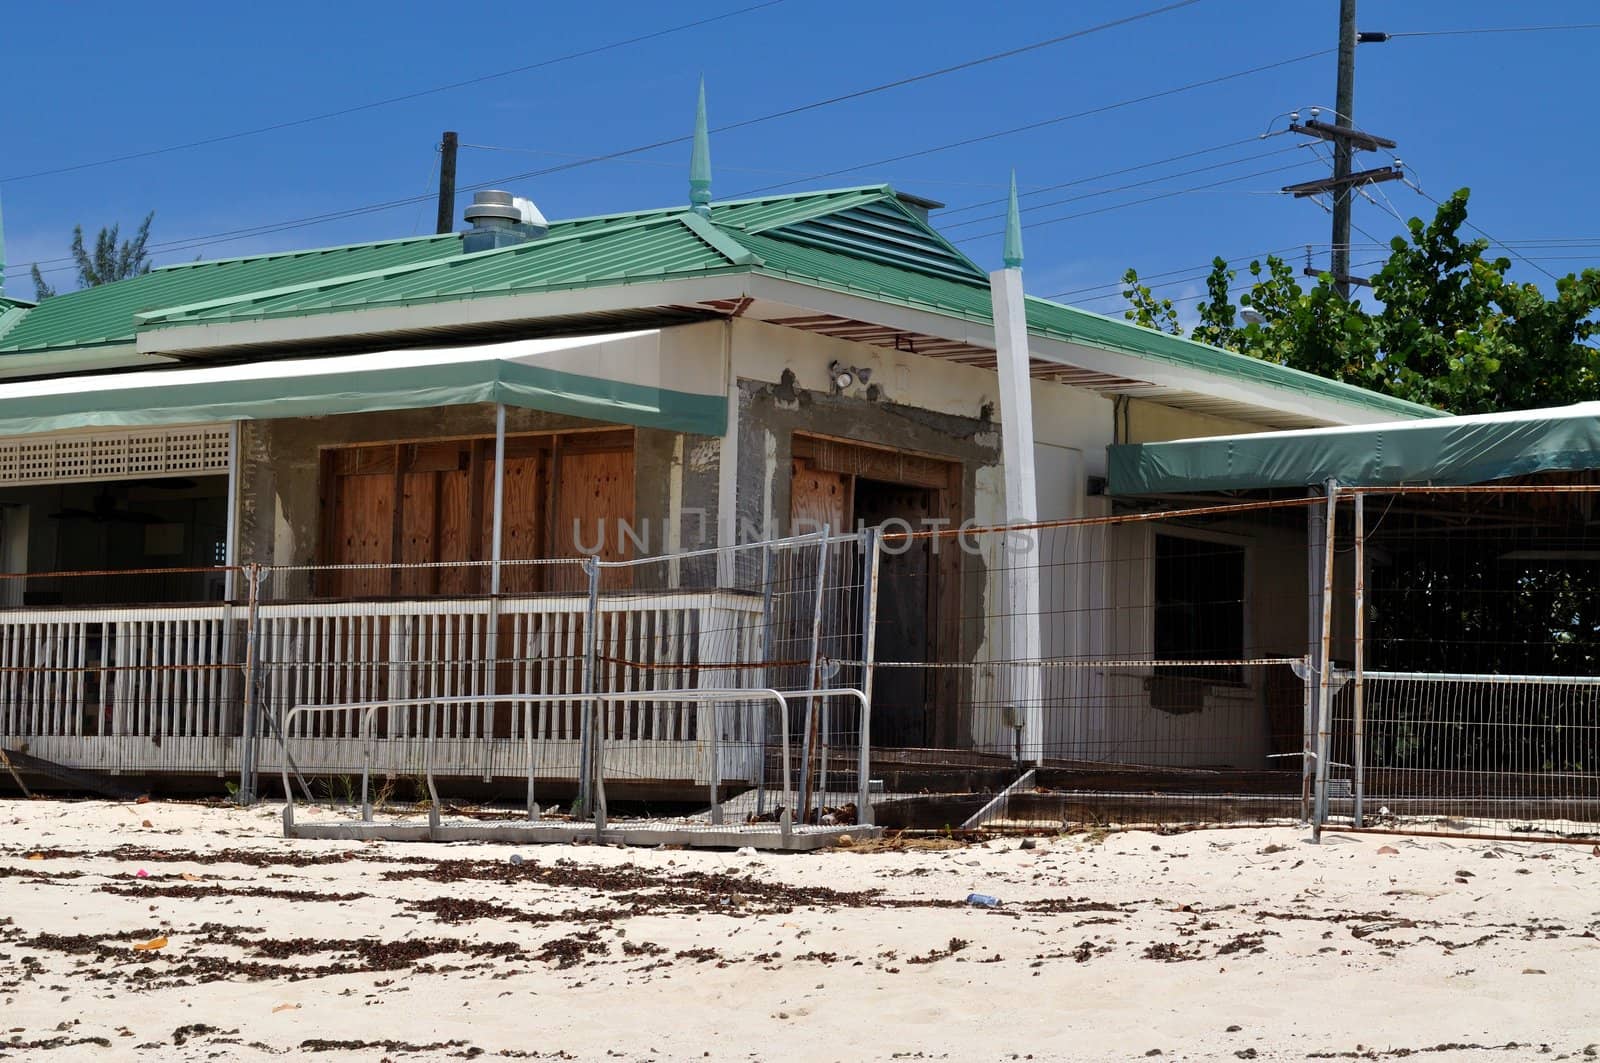 Abandoned Beach House by fernando2148